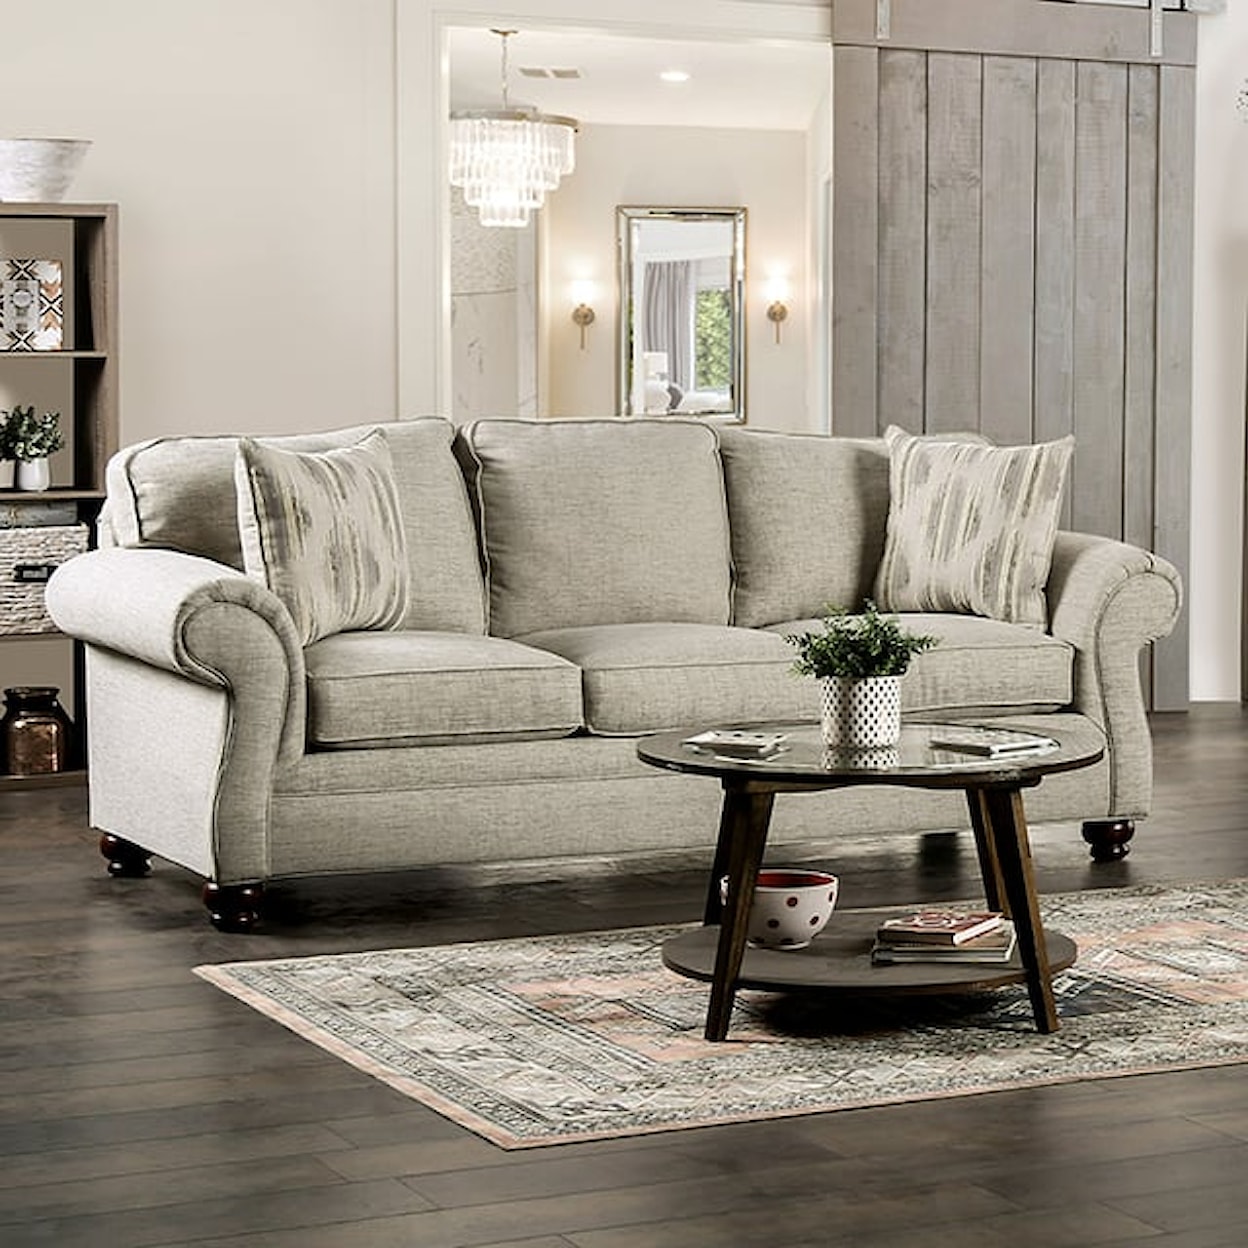 Furniture of America Amaya Transitional Sofa